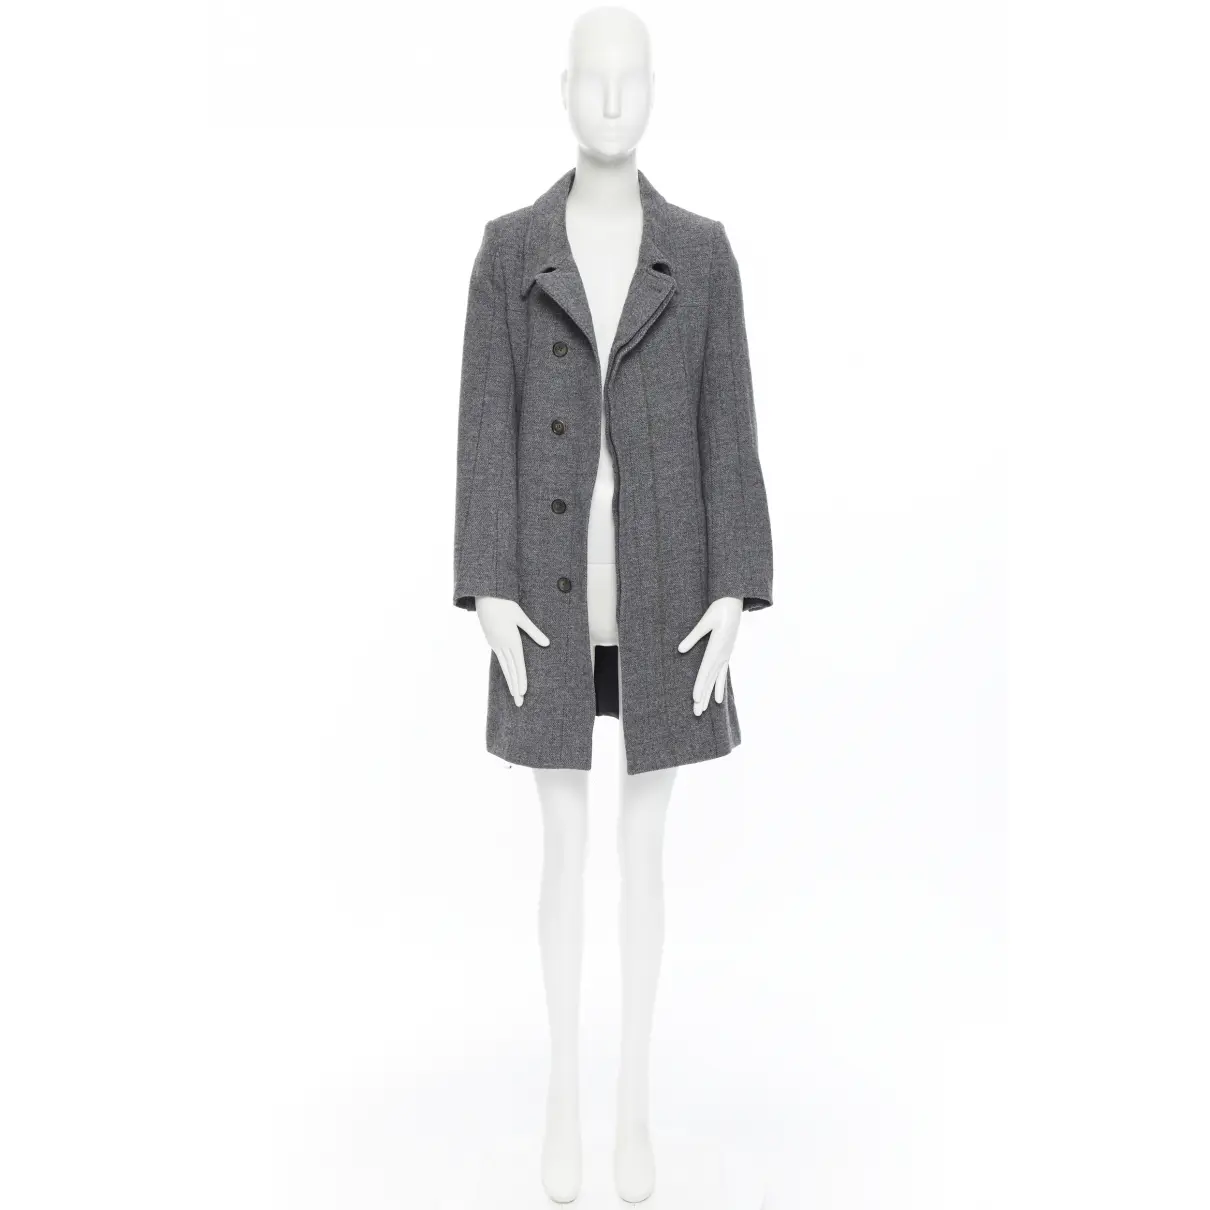 Buy Stephan Schneider Wool coat online